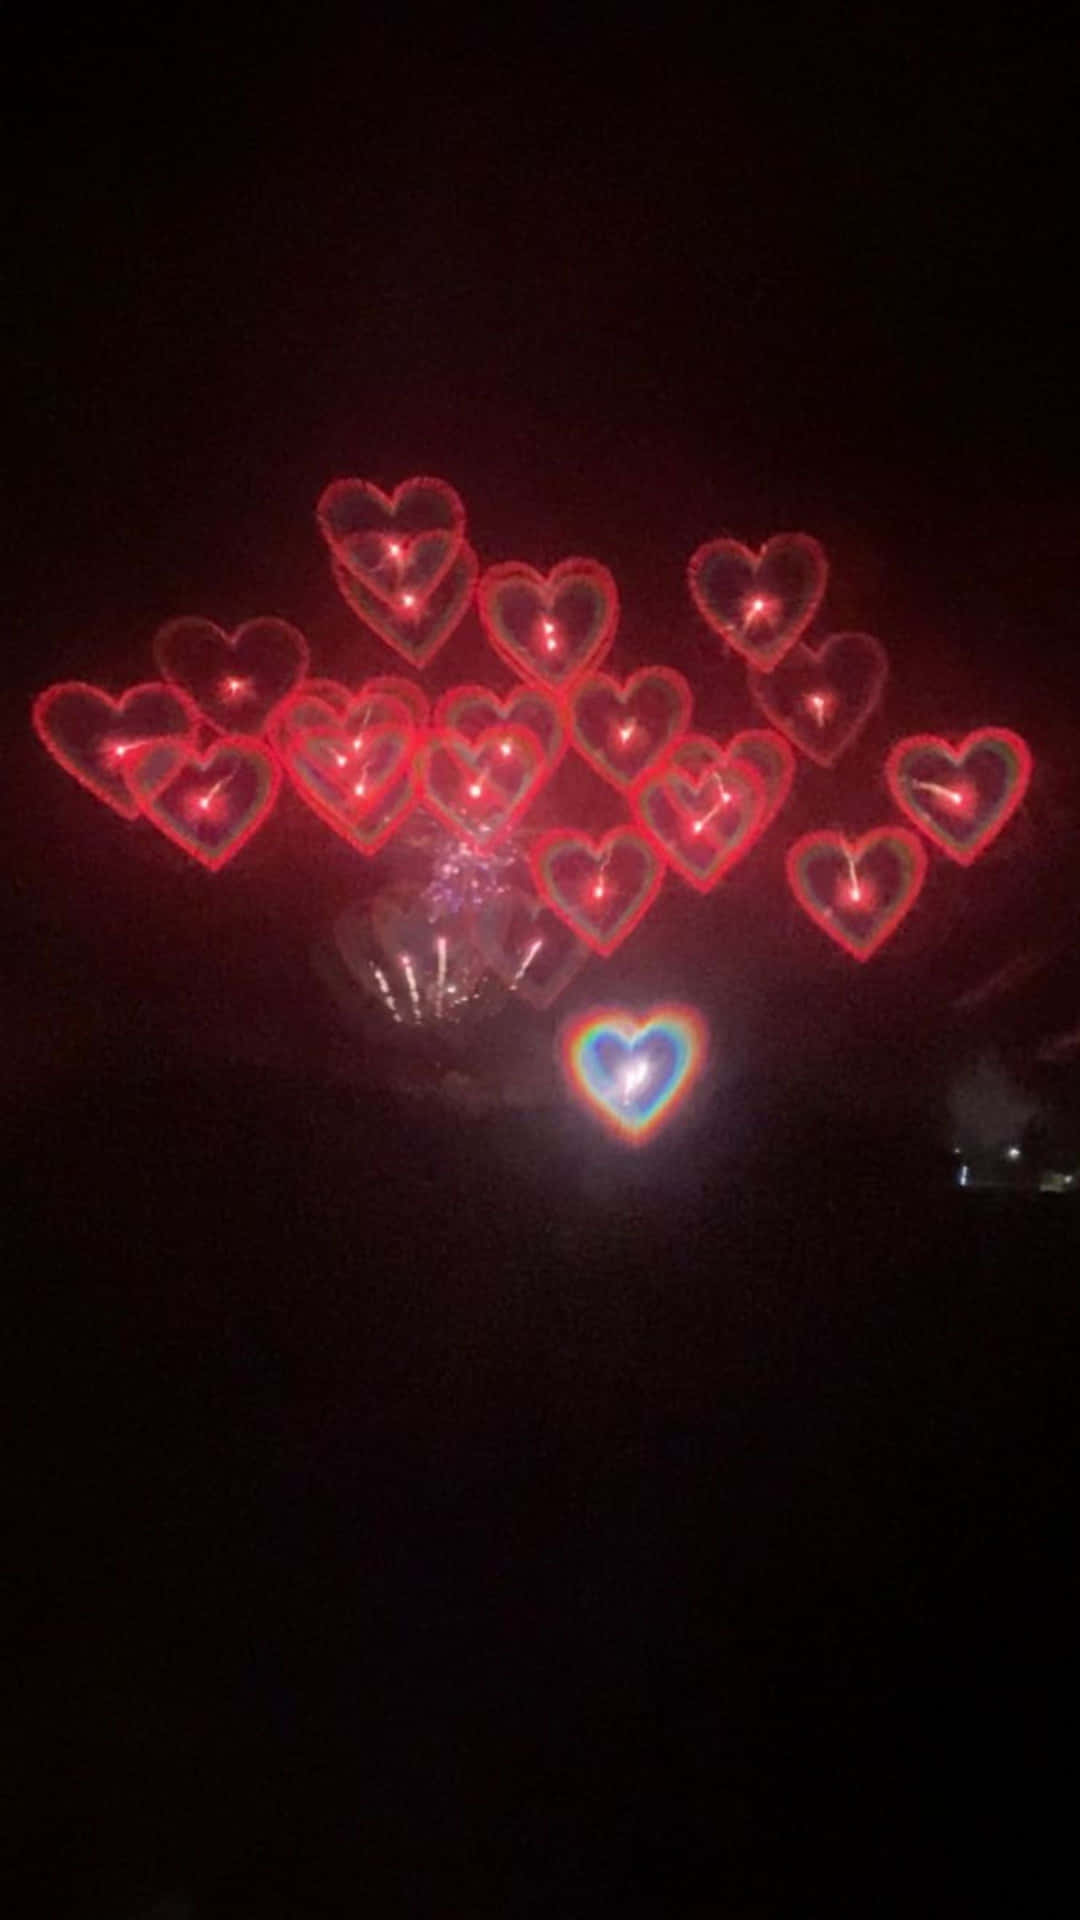 a heart shaped firework in the dark